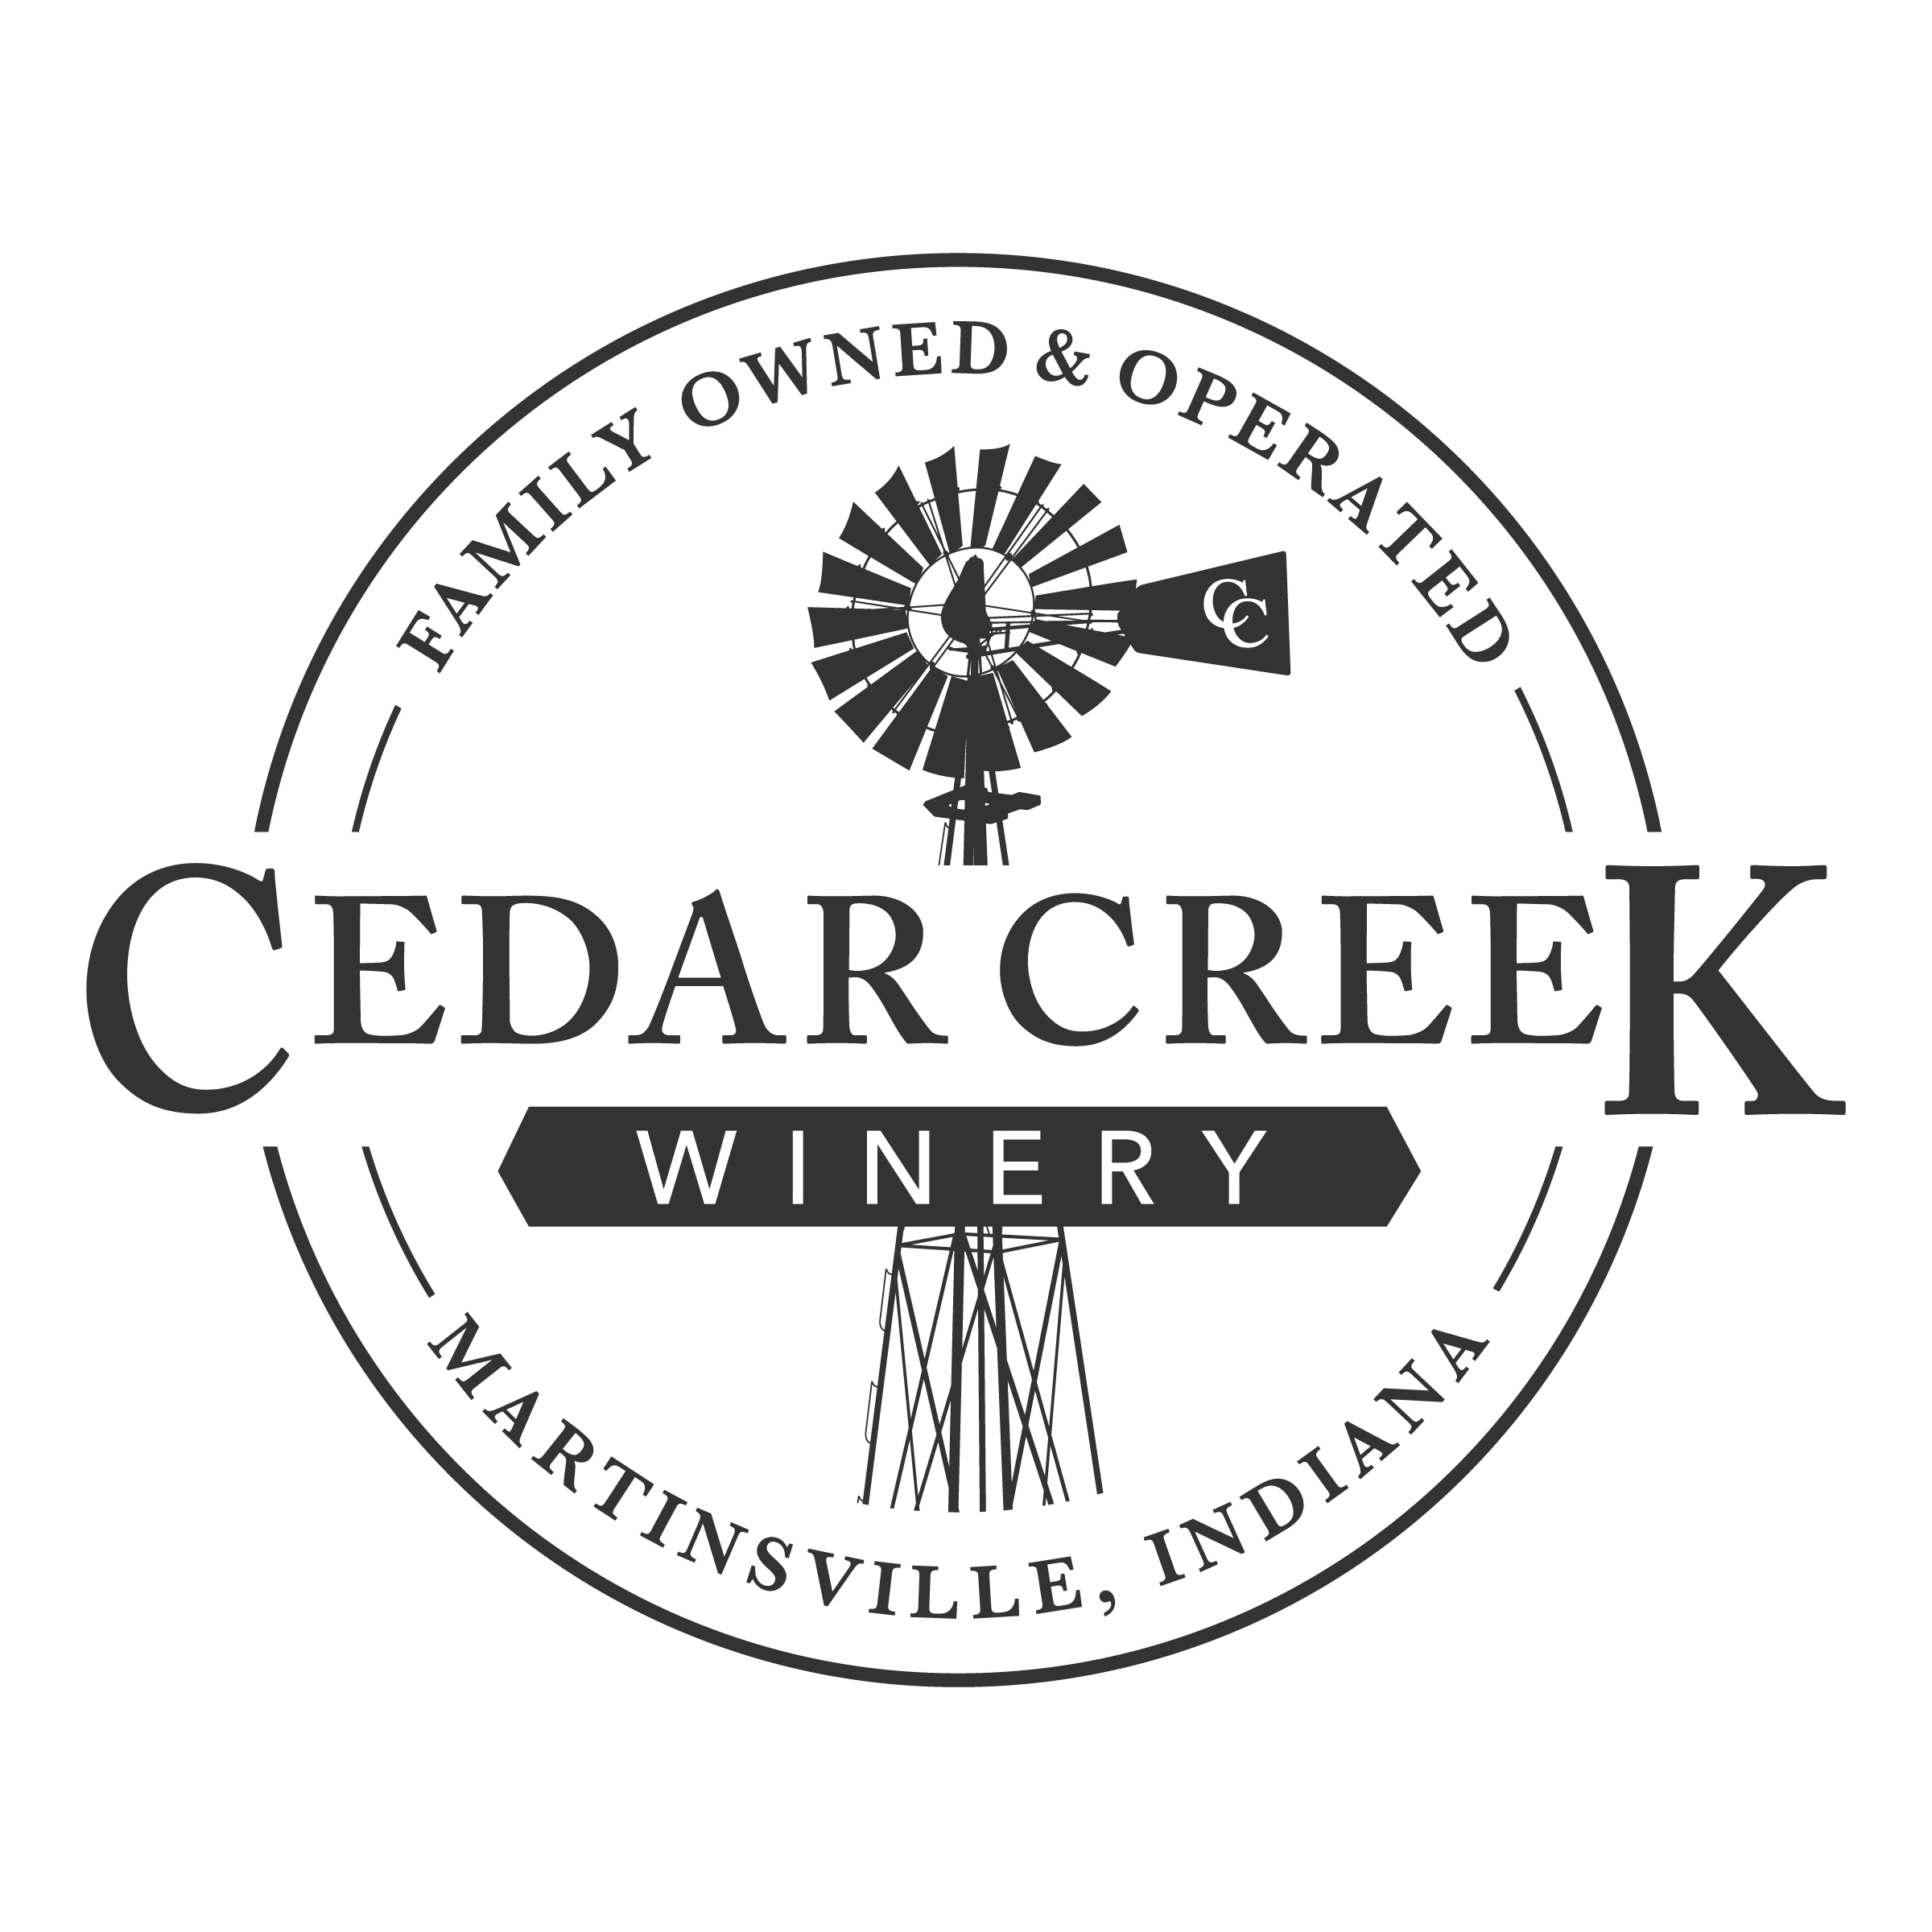 Creek Logo - Cedar Creek Winery, Martinsville, IN 46151 – Winery, Brewery, Distillery